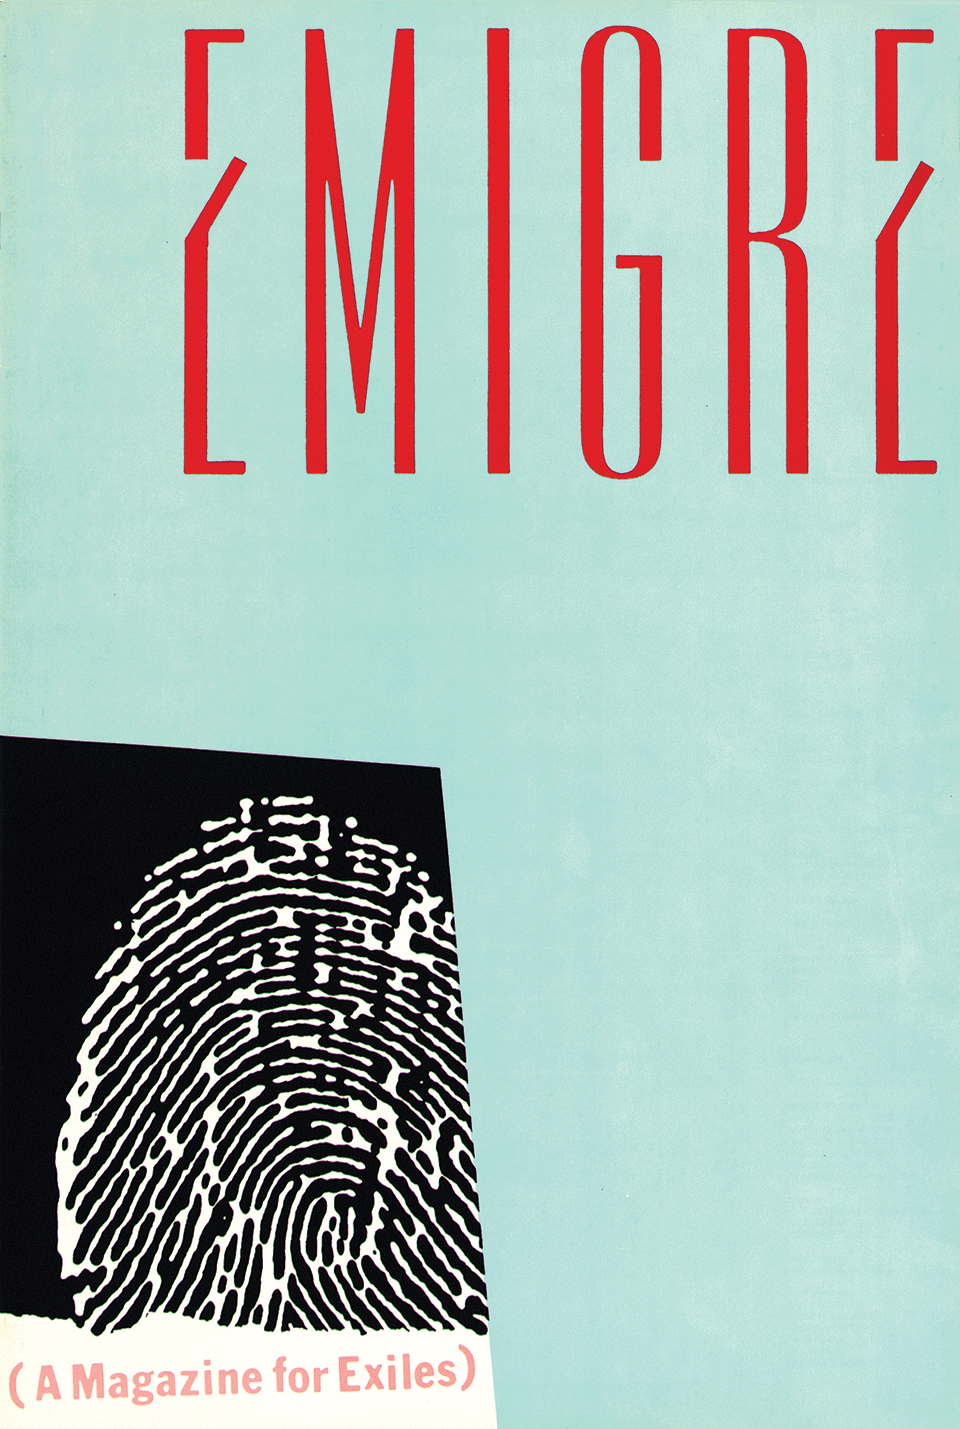 EMIGRE magazine cover